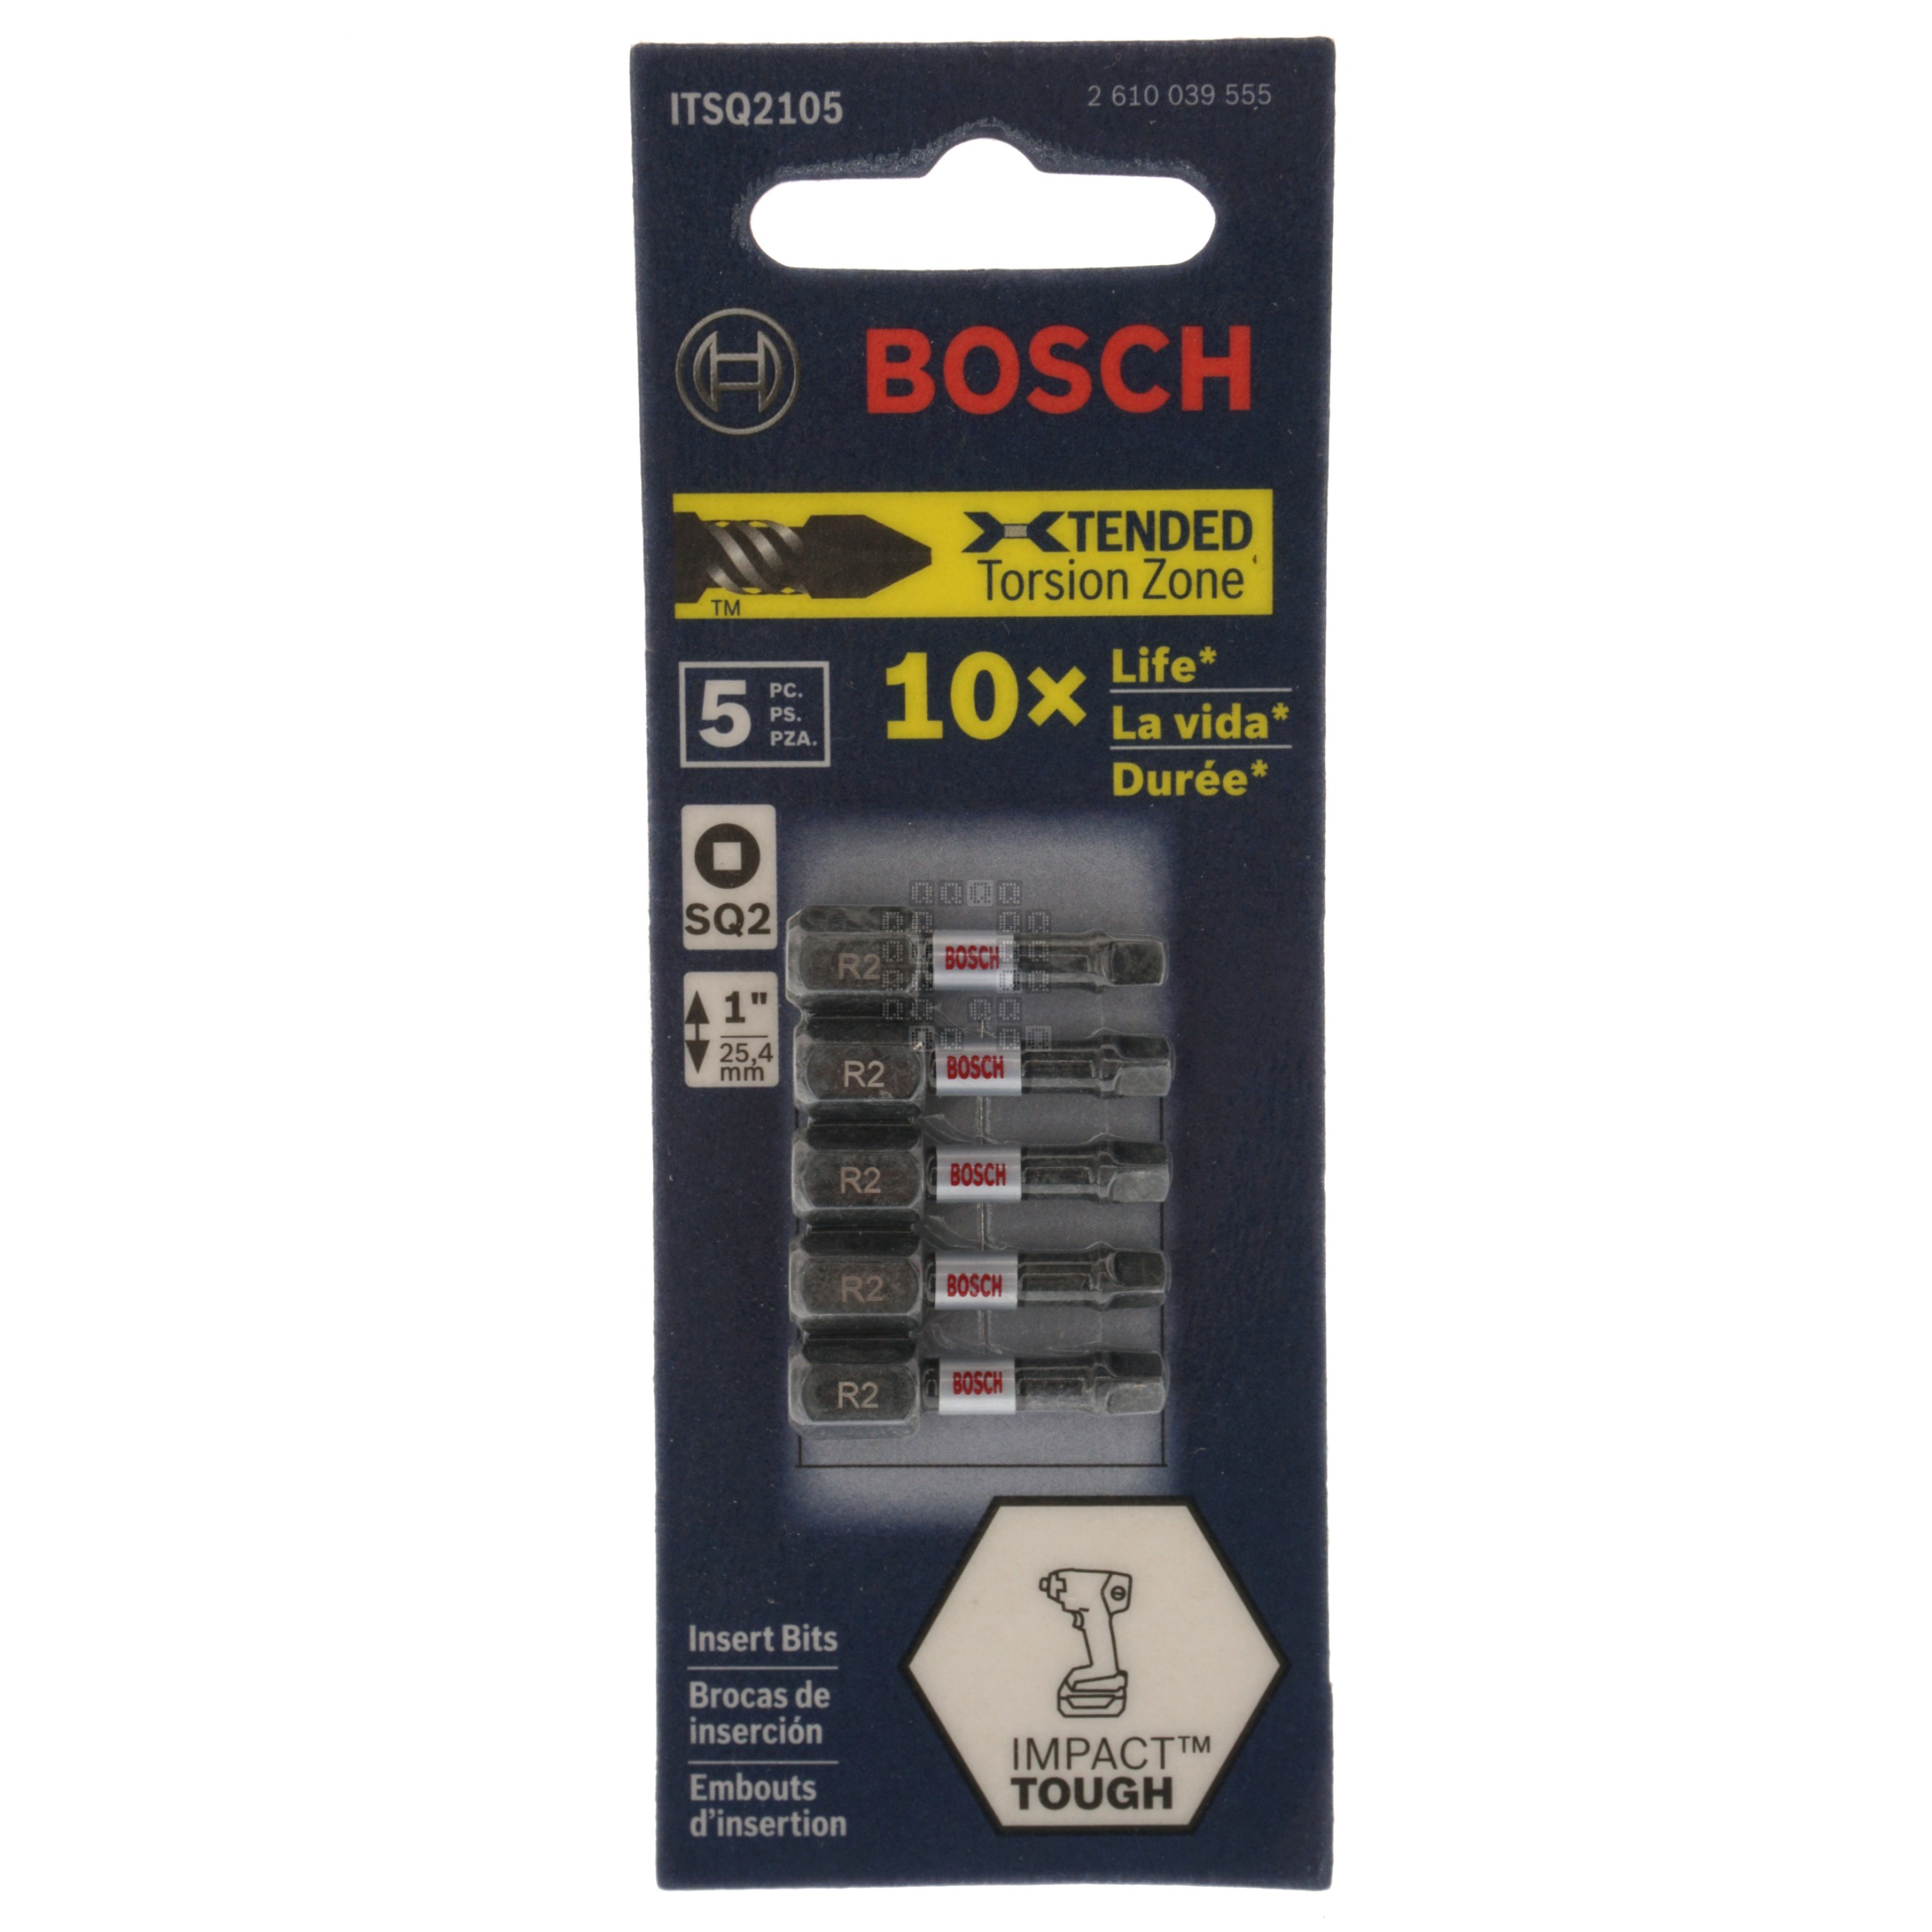 Bosch 2610039555 ITSQ2105 Impact Tough SQ2 #2 Square Recess Insert Bits, 5-Pack